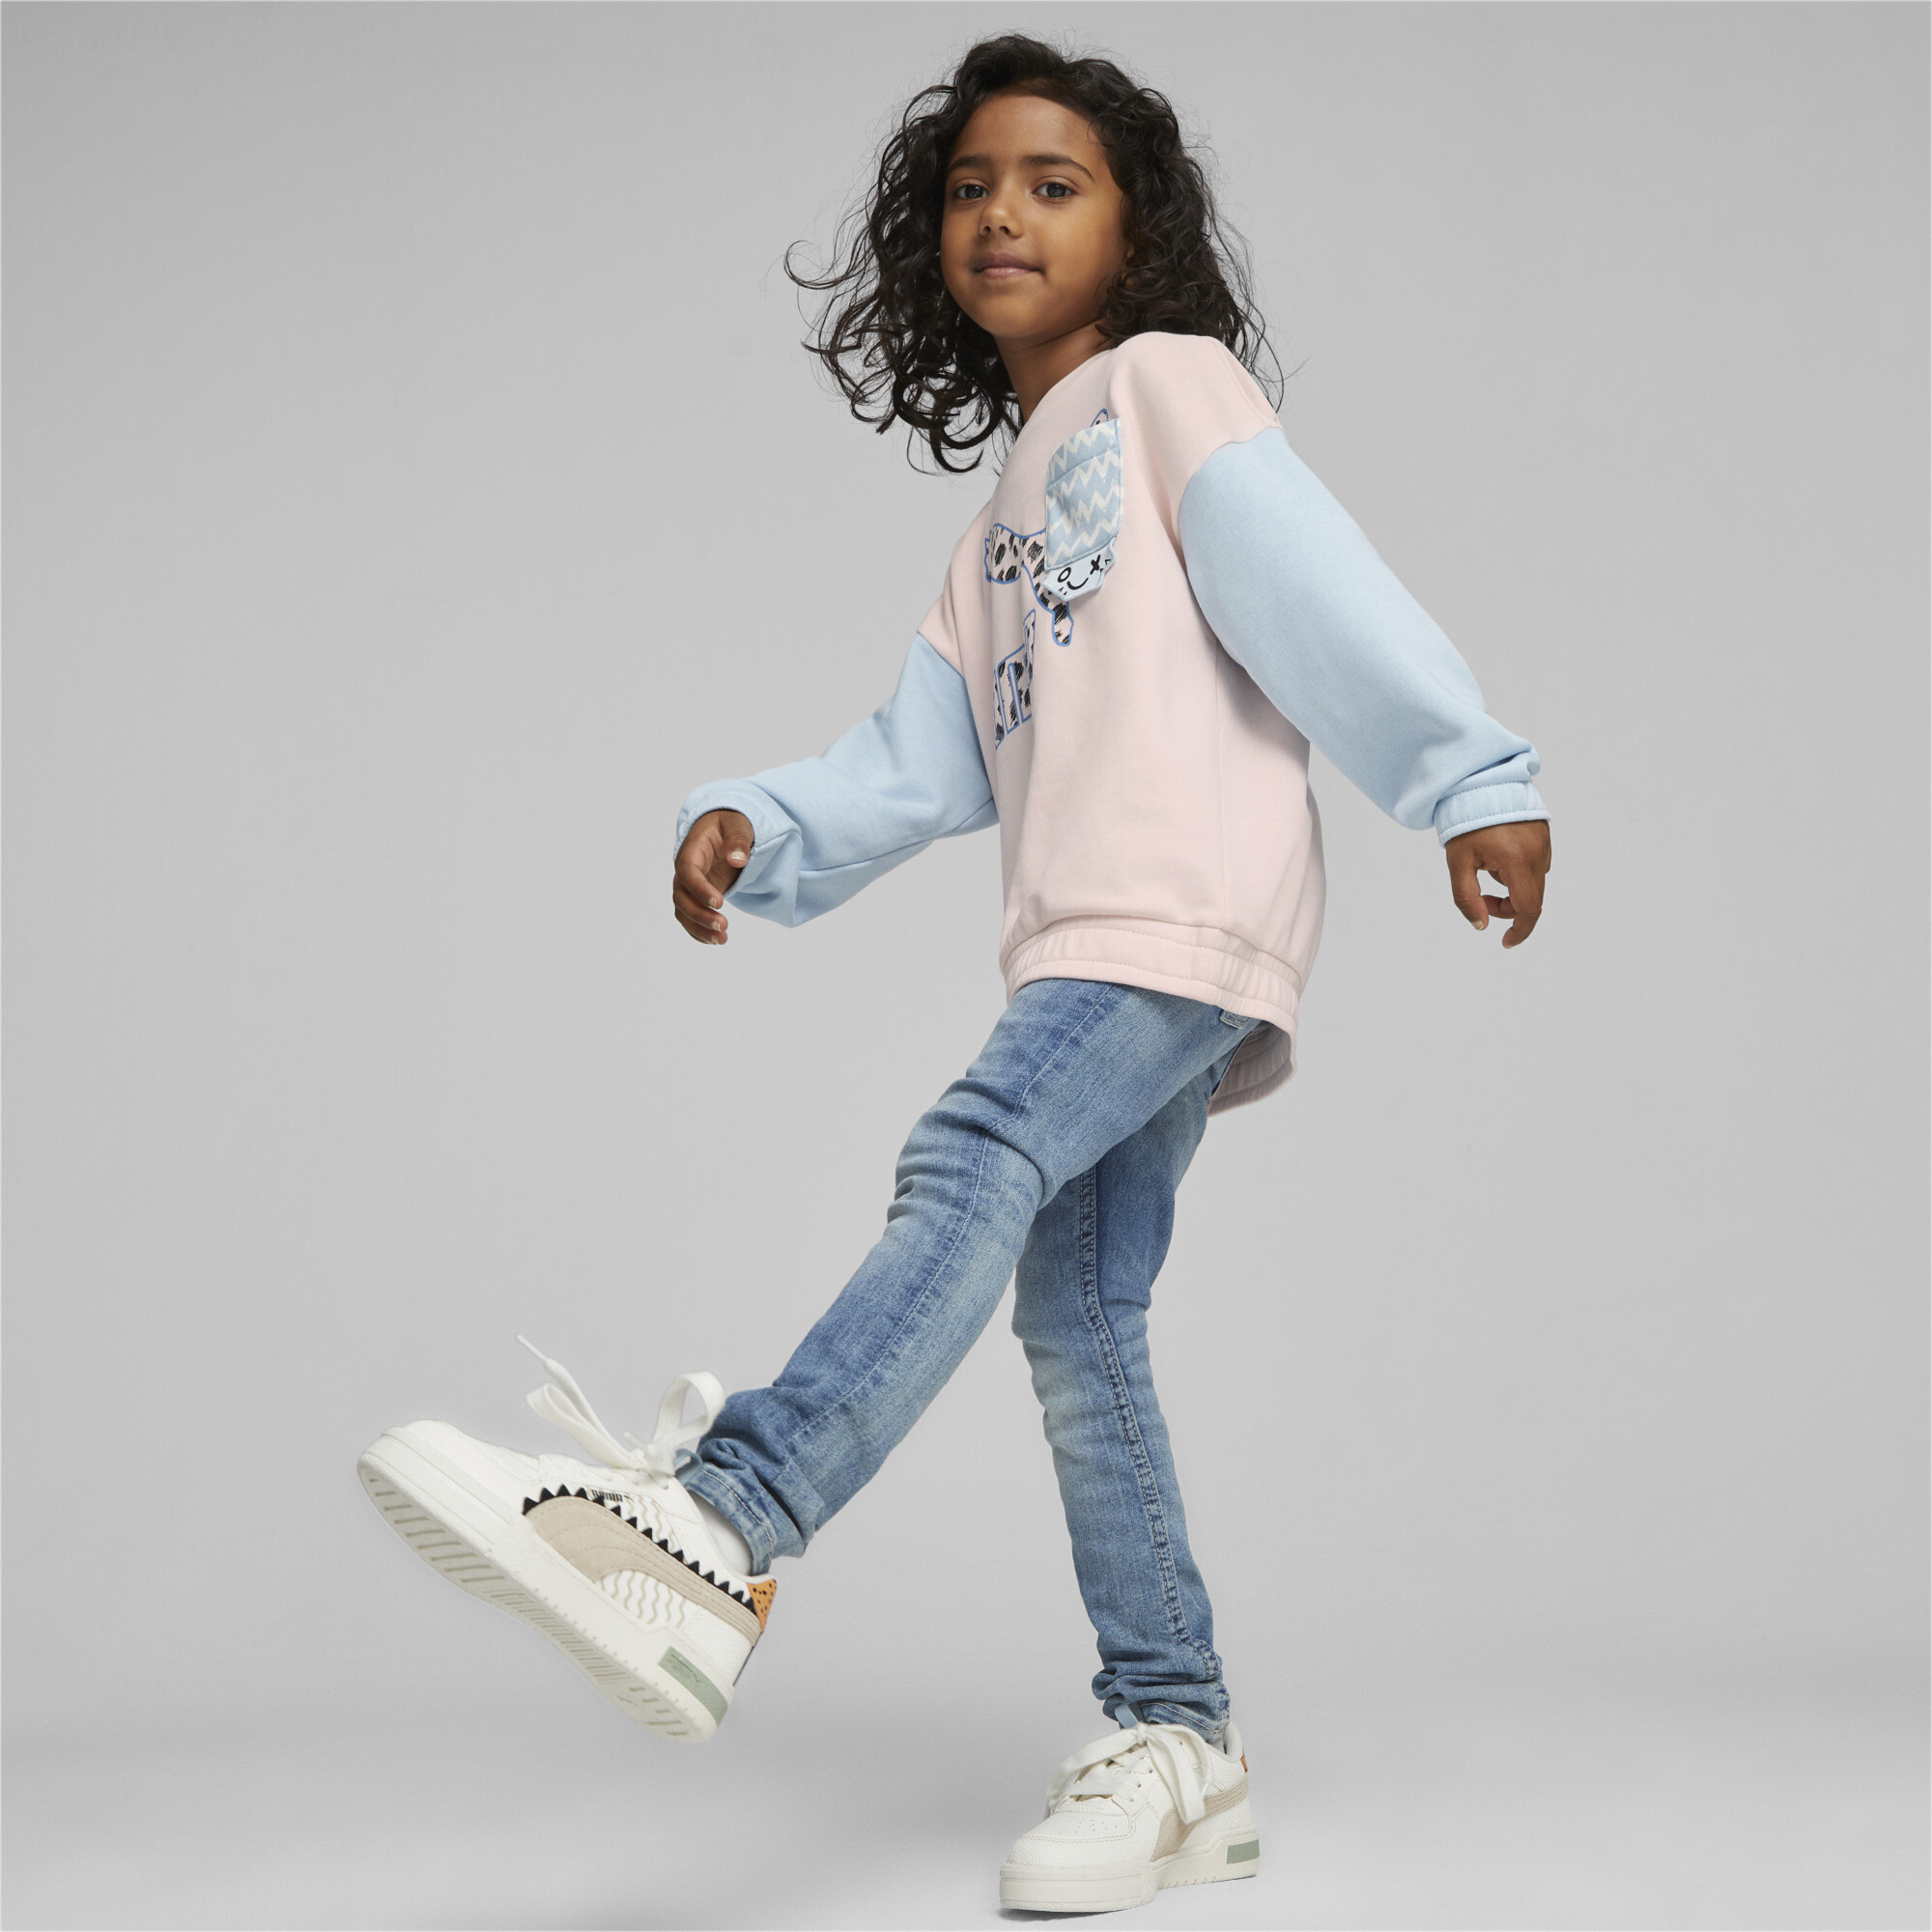 PUMA Classics Mix Match Sweatshirt In Pink, Size 7-8 Youth